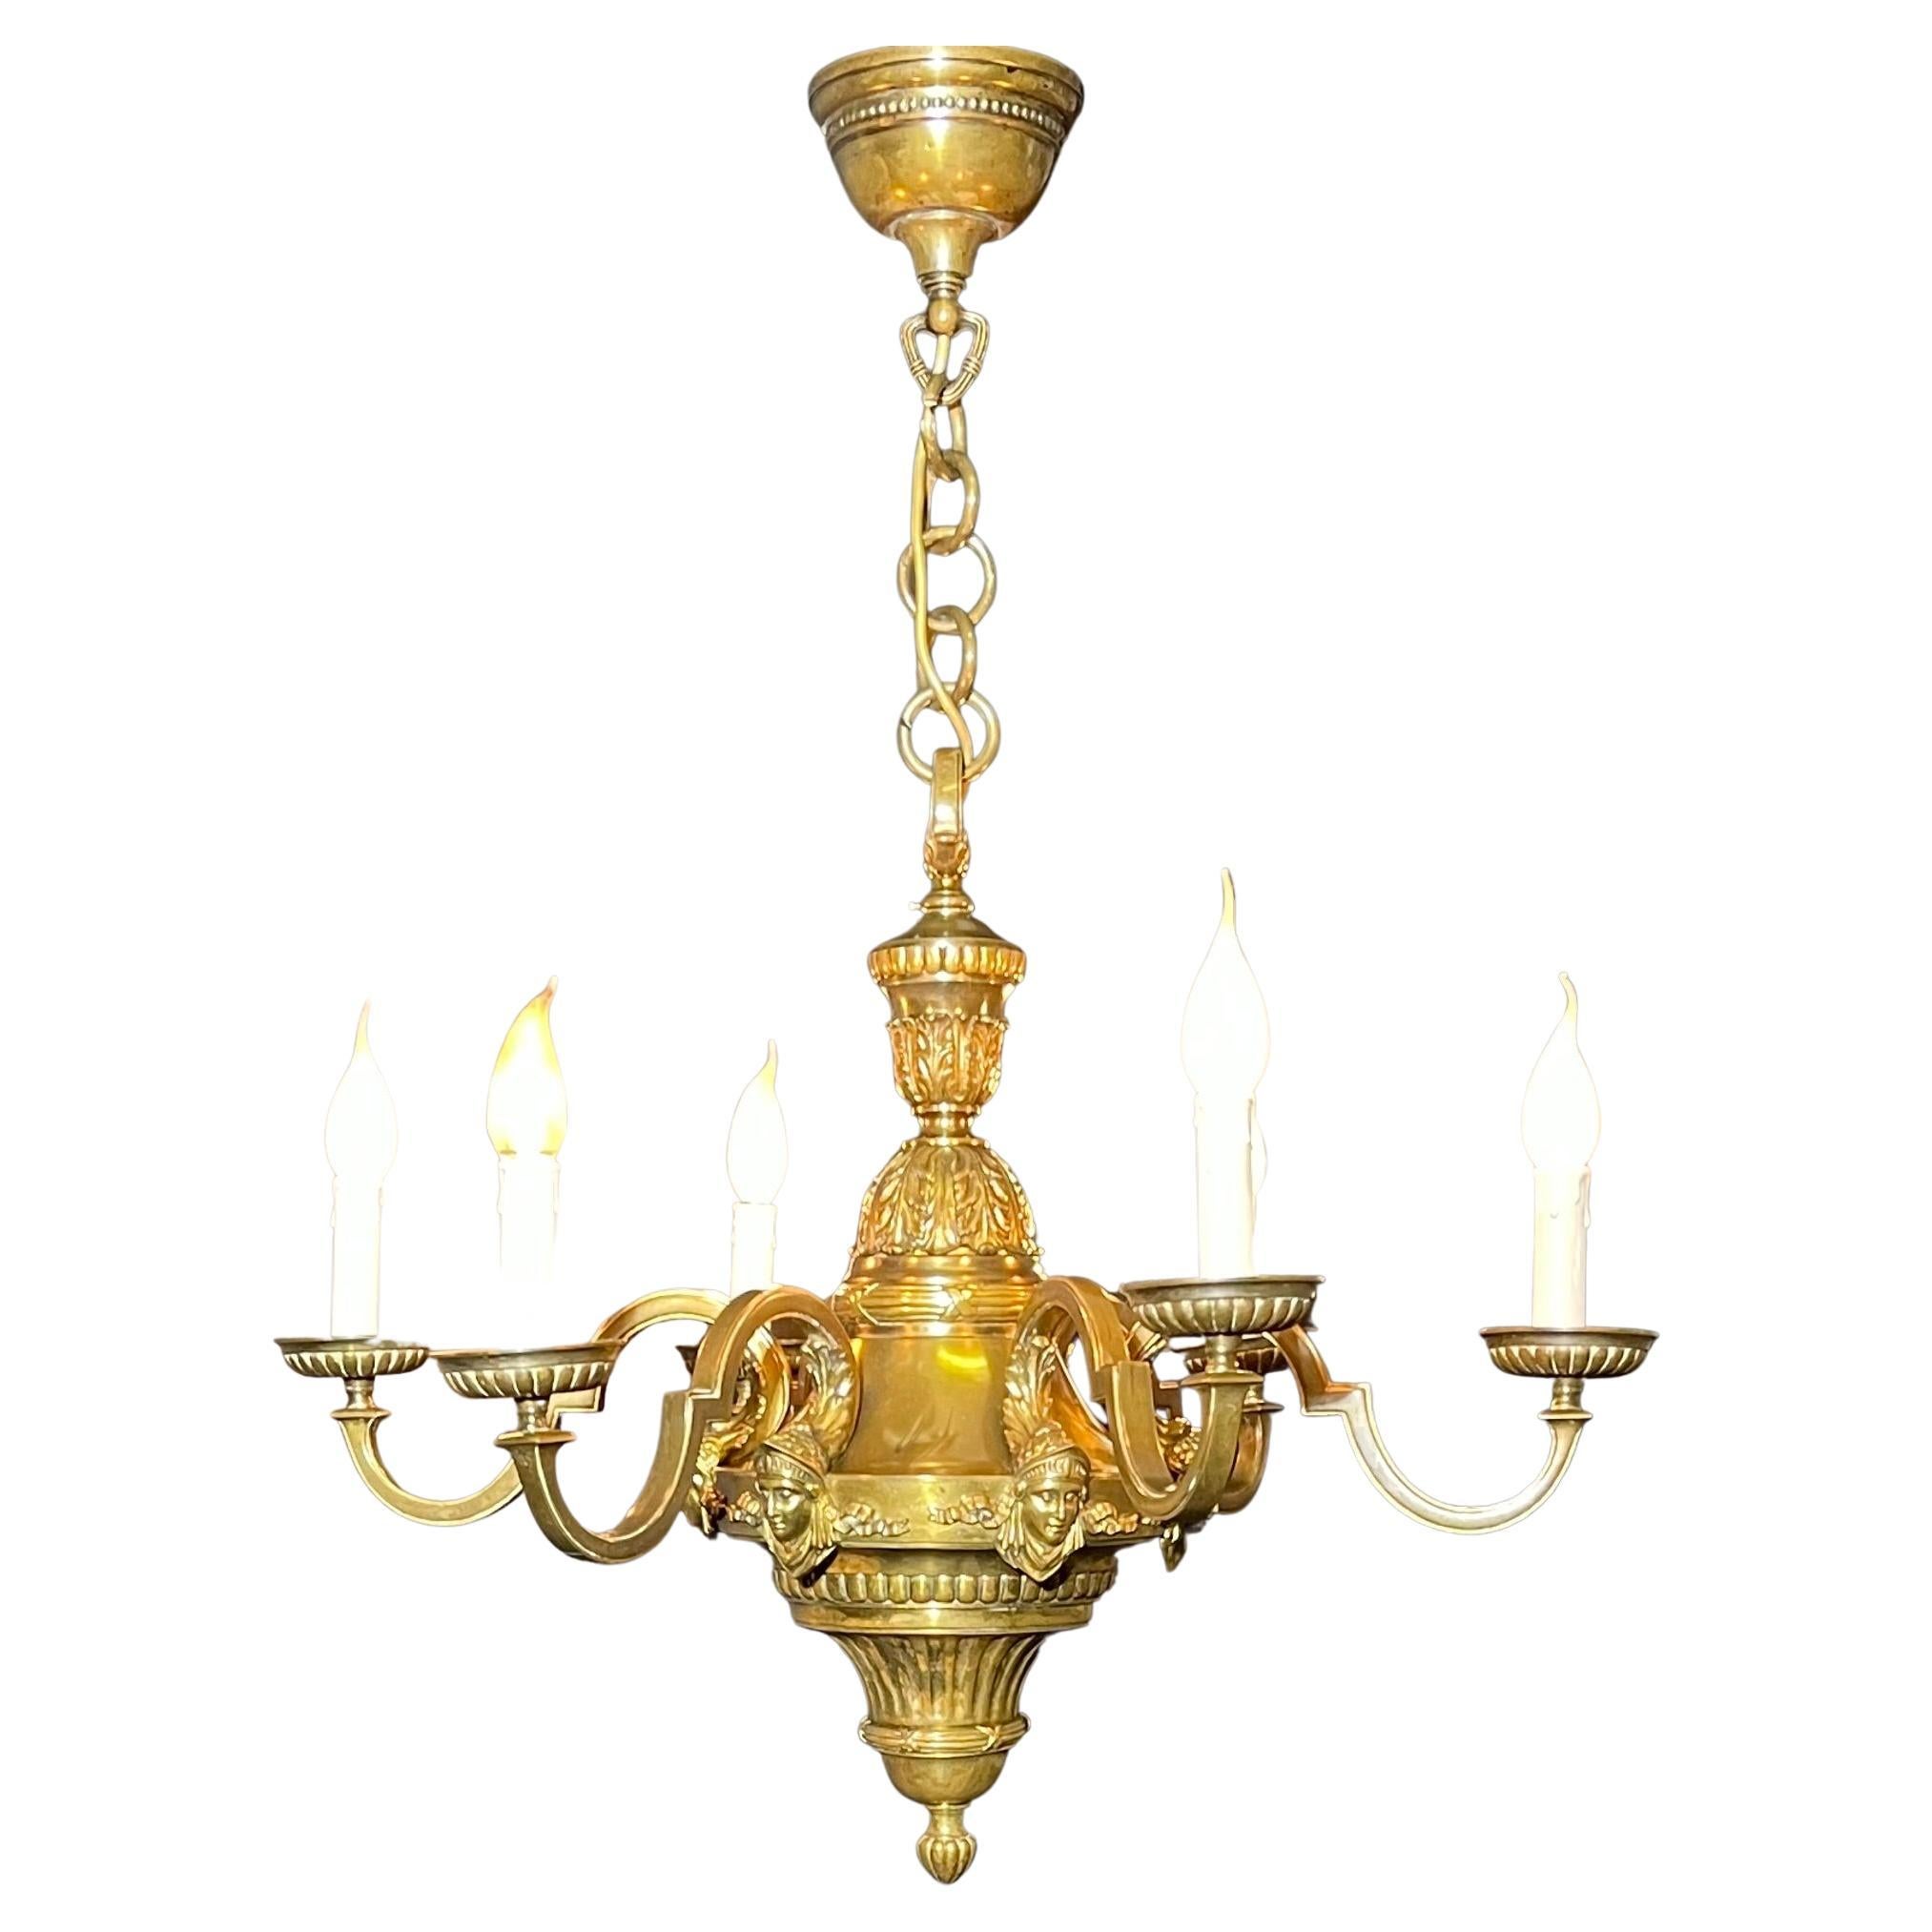 A large Louis XVI style six-light massiv bronze chandelier, France, circa 1900s.
Socket: 6 x e14 for standard screw bulb (newly rewired).

 